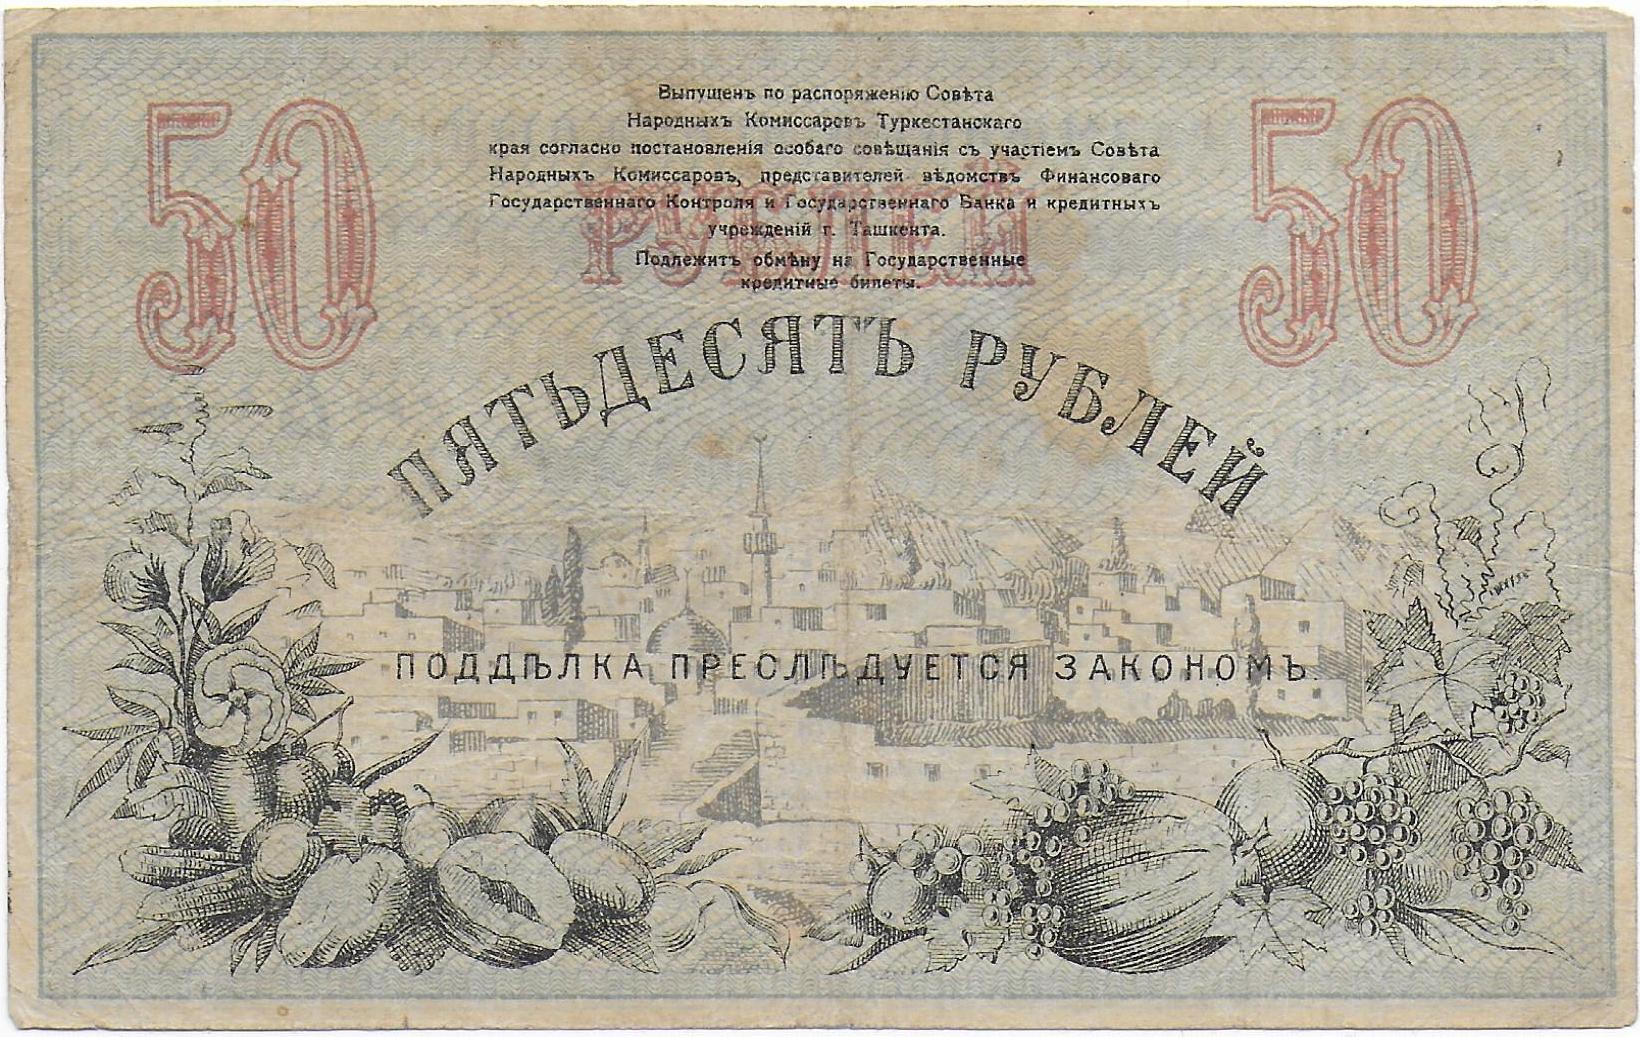 Russian Turkestan Tashkent 50 Rubles 1918 back.jpg